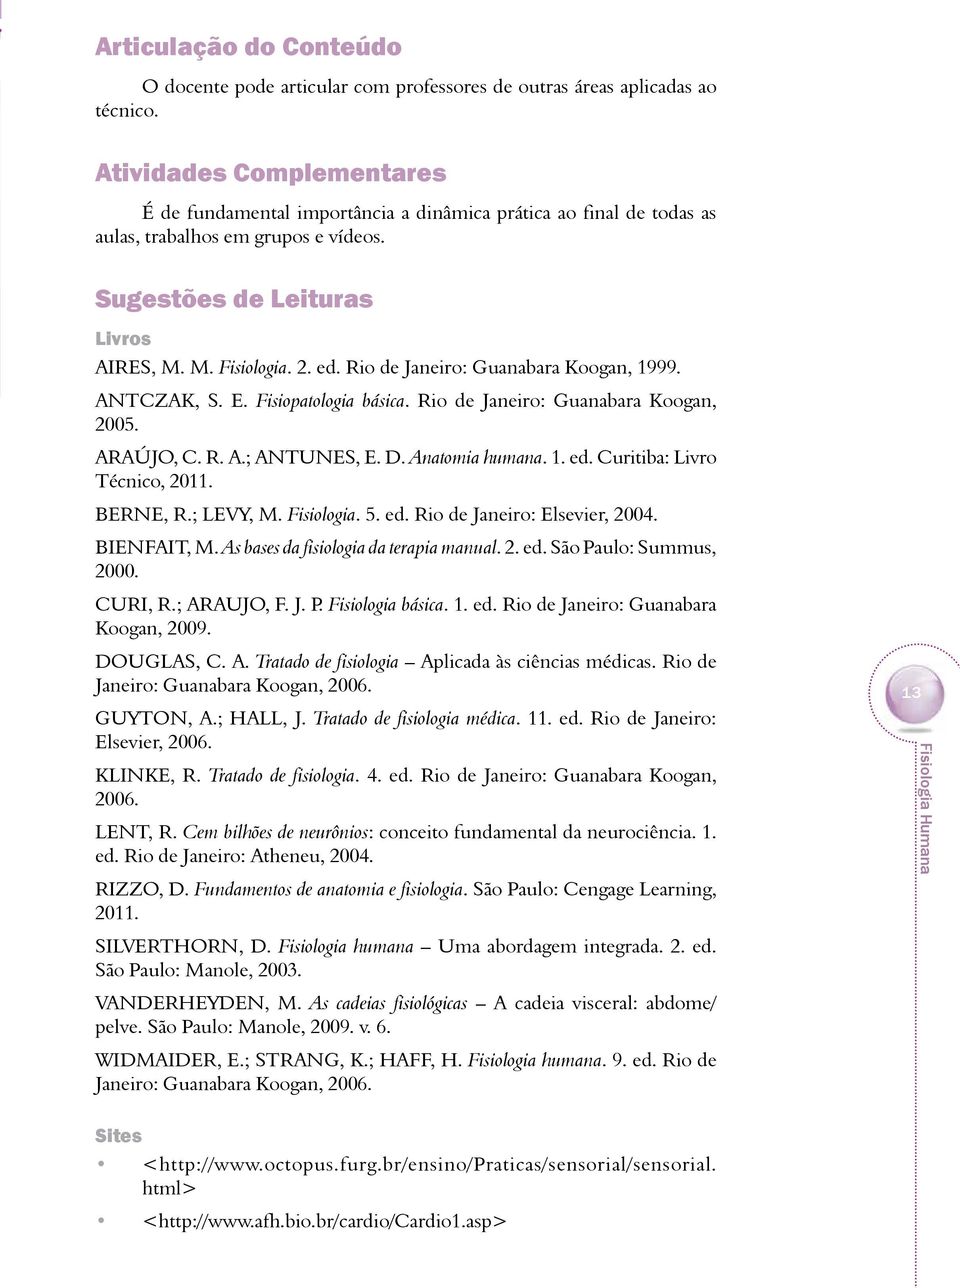 Rio de Janeiro: Guanabara Koogan, 1999. ANTCZAK, S. E. Fisiopatologia básica. Rio de Janeiro: Guanabara Koogan, 2005. ARAÚJO, C. R. A.; ANTUNES, E. D. Anatomia humana. 1. ed.